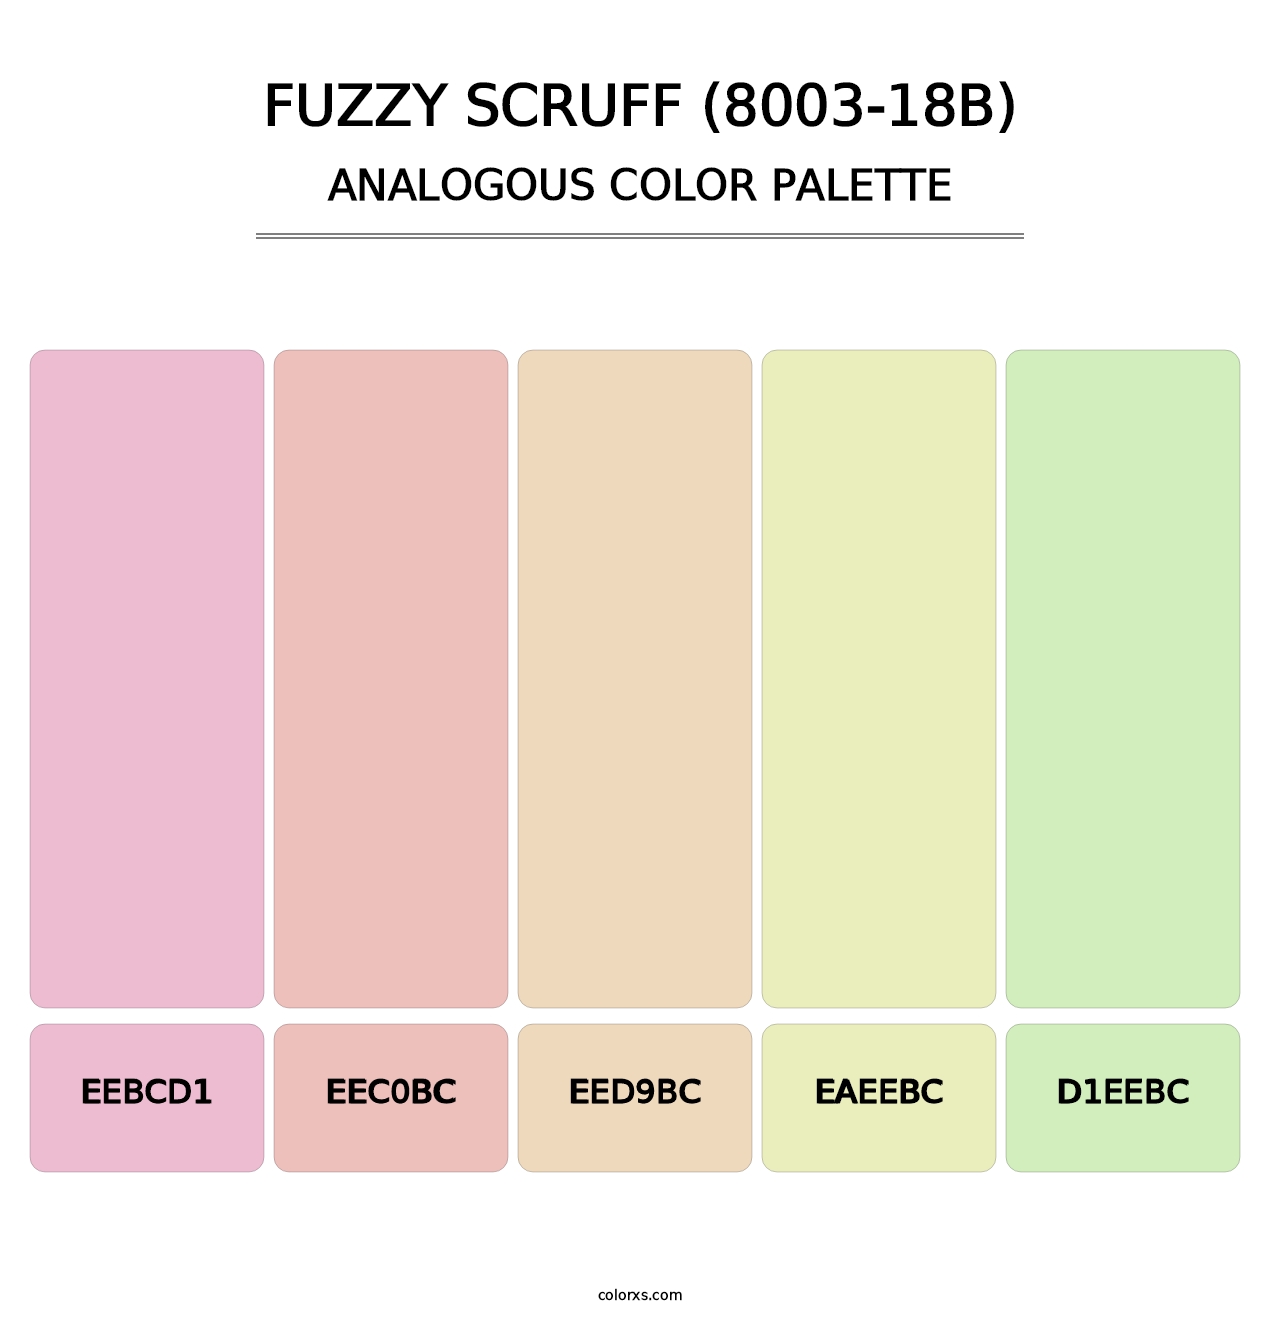 Fuzzy Scruff (8003-18B) - Analogous Color Palette